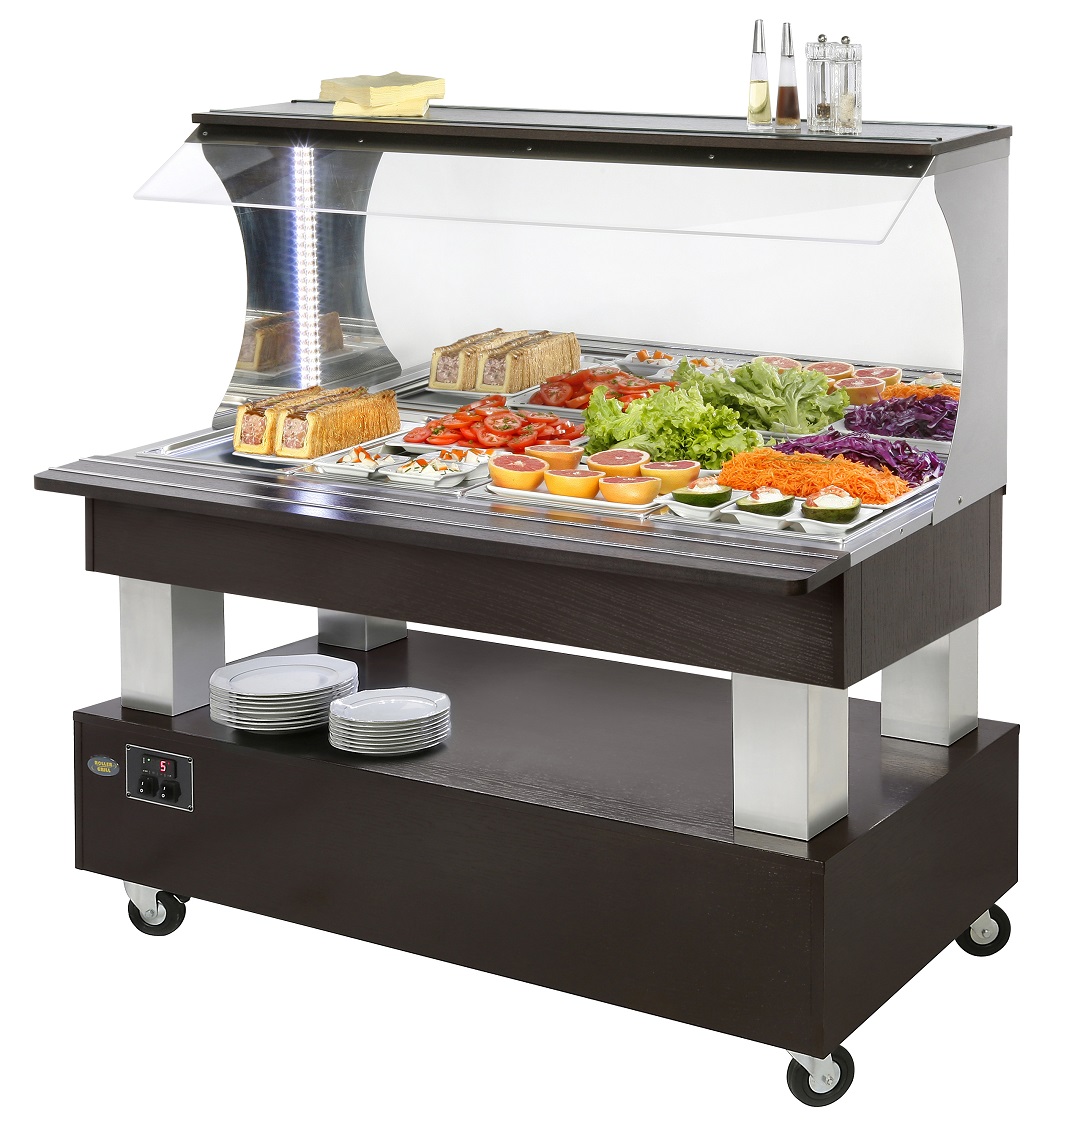 Roller Grill SBM 40 F Refrigerated Buffet Display Bar